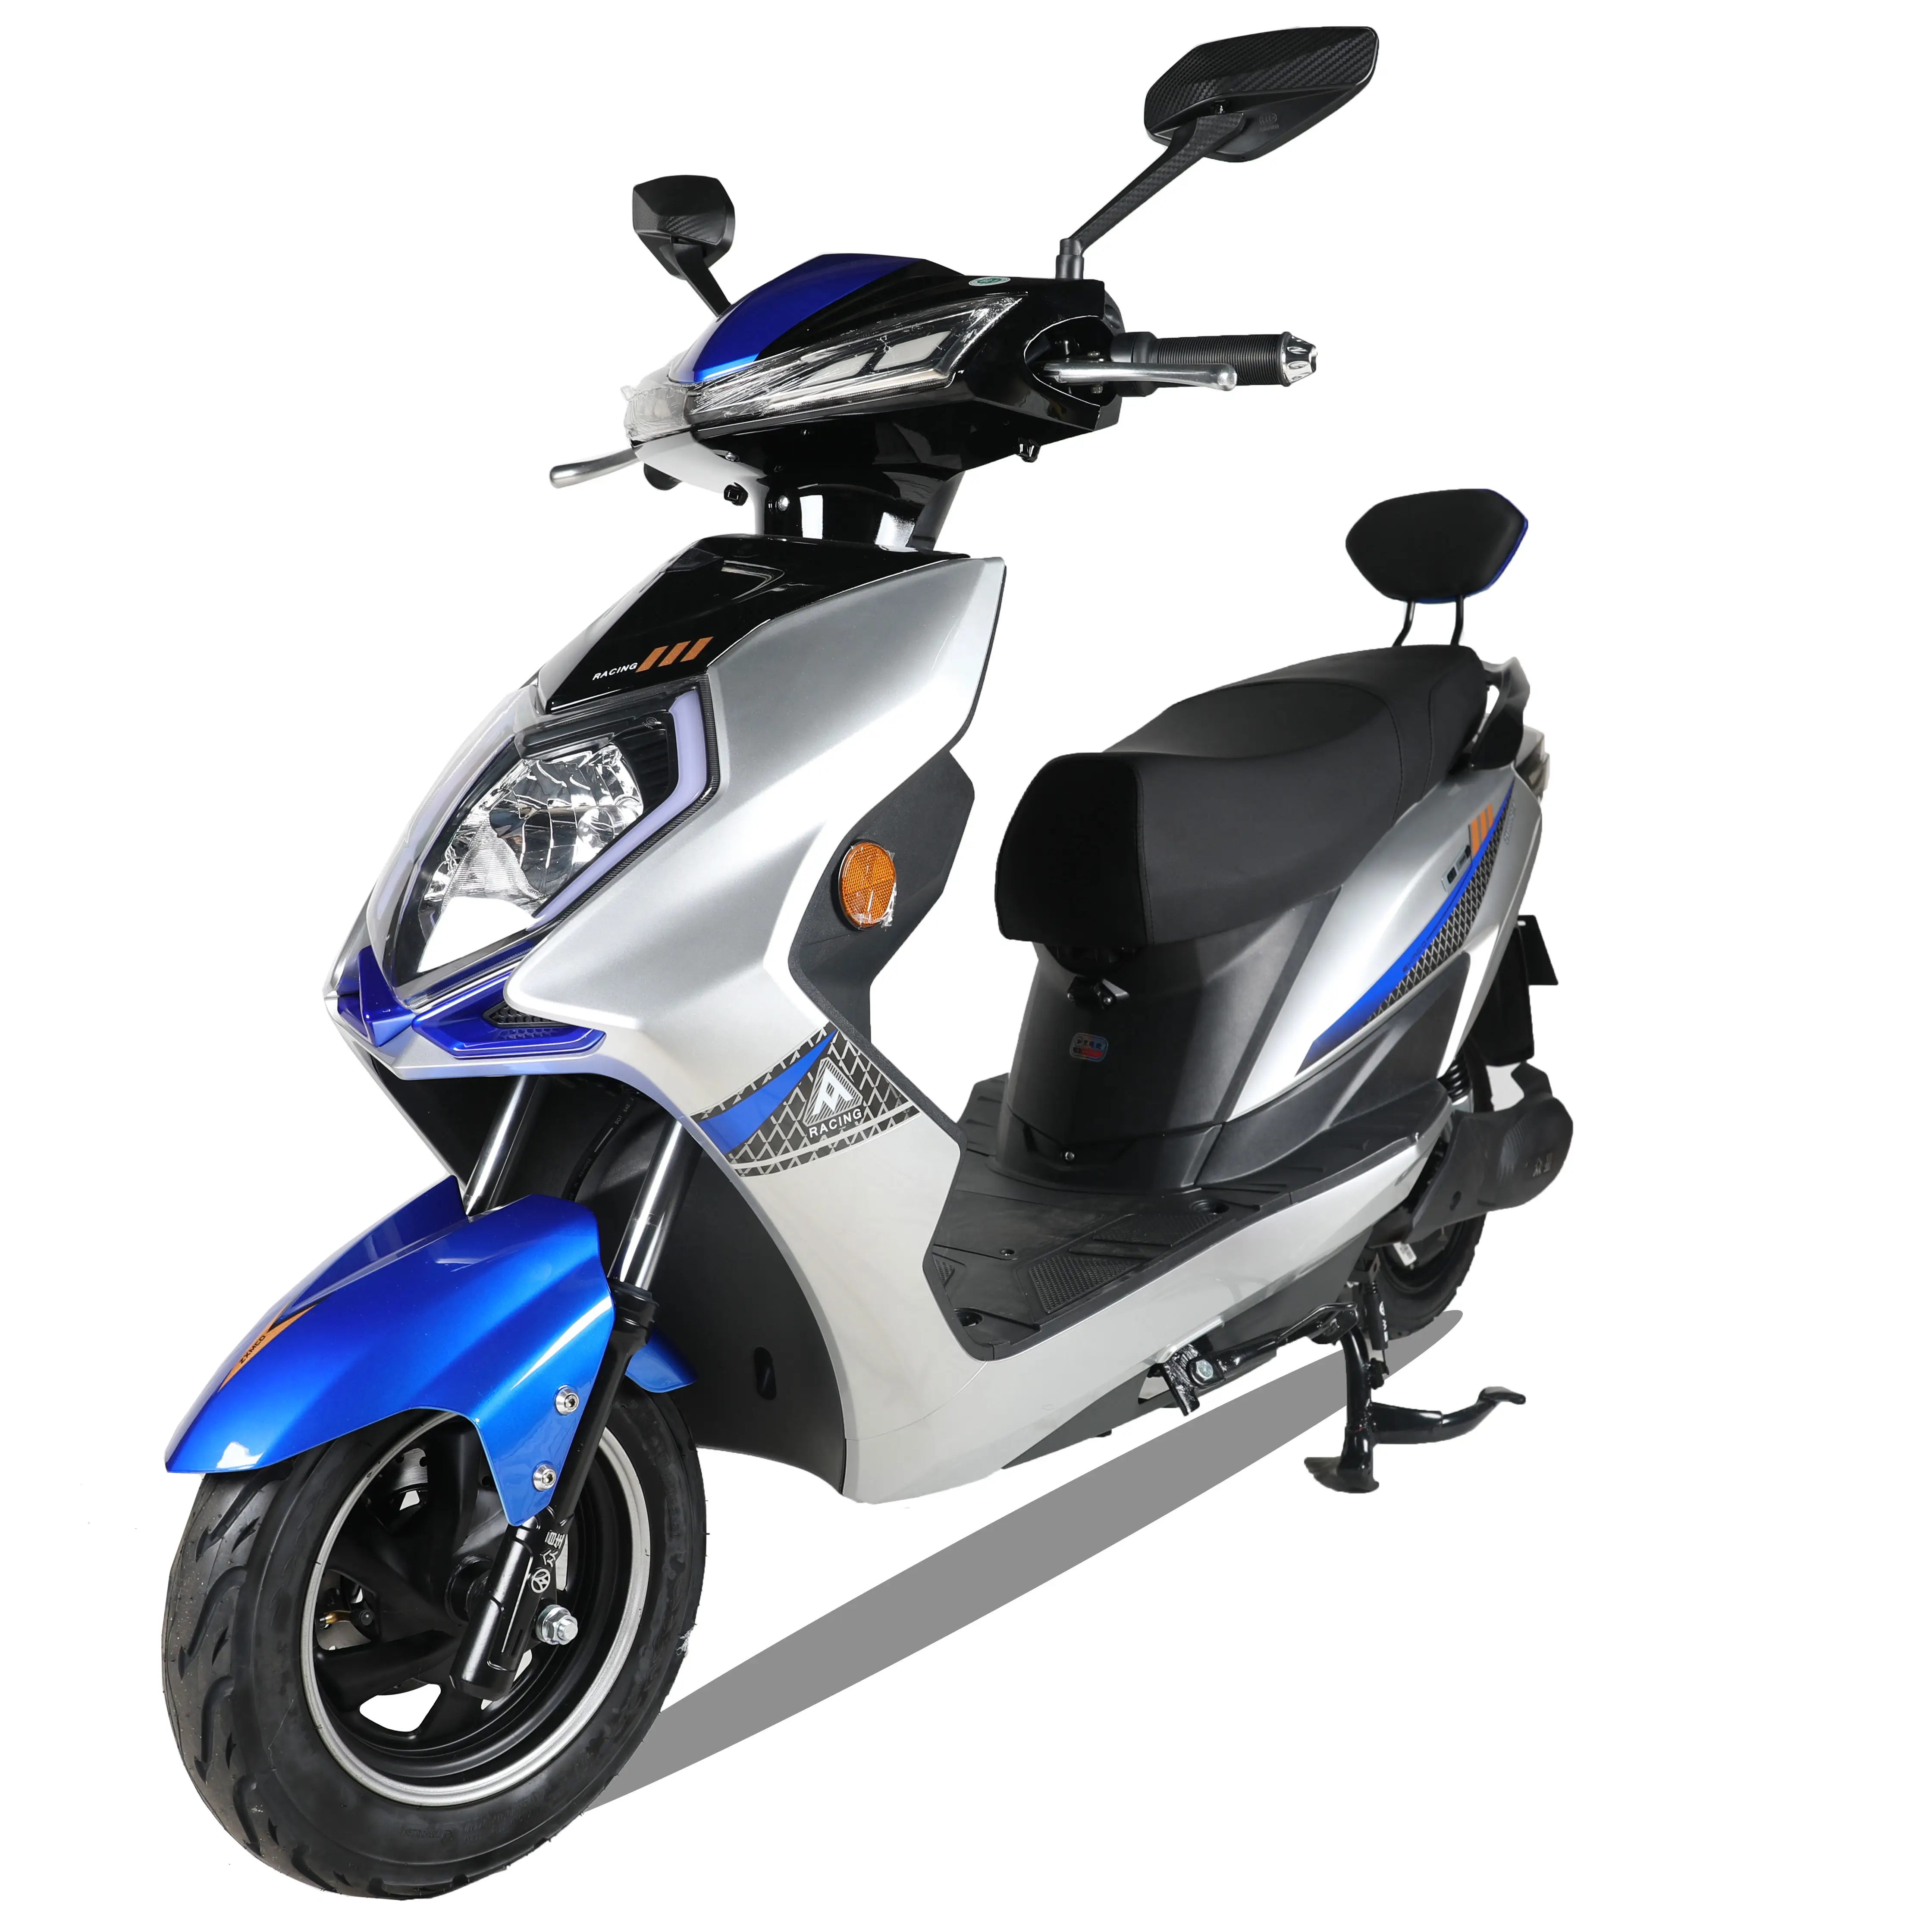 सबसे सबसे अच्छा बेच सस्ते 2 पहिया इलेक्ट्रिक स्कूटर 600W वयस्क बिजली की मोटर साइकिल के साथ अच्छी गुणवत्ता